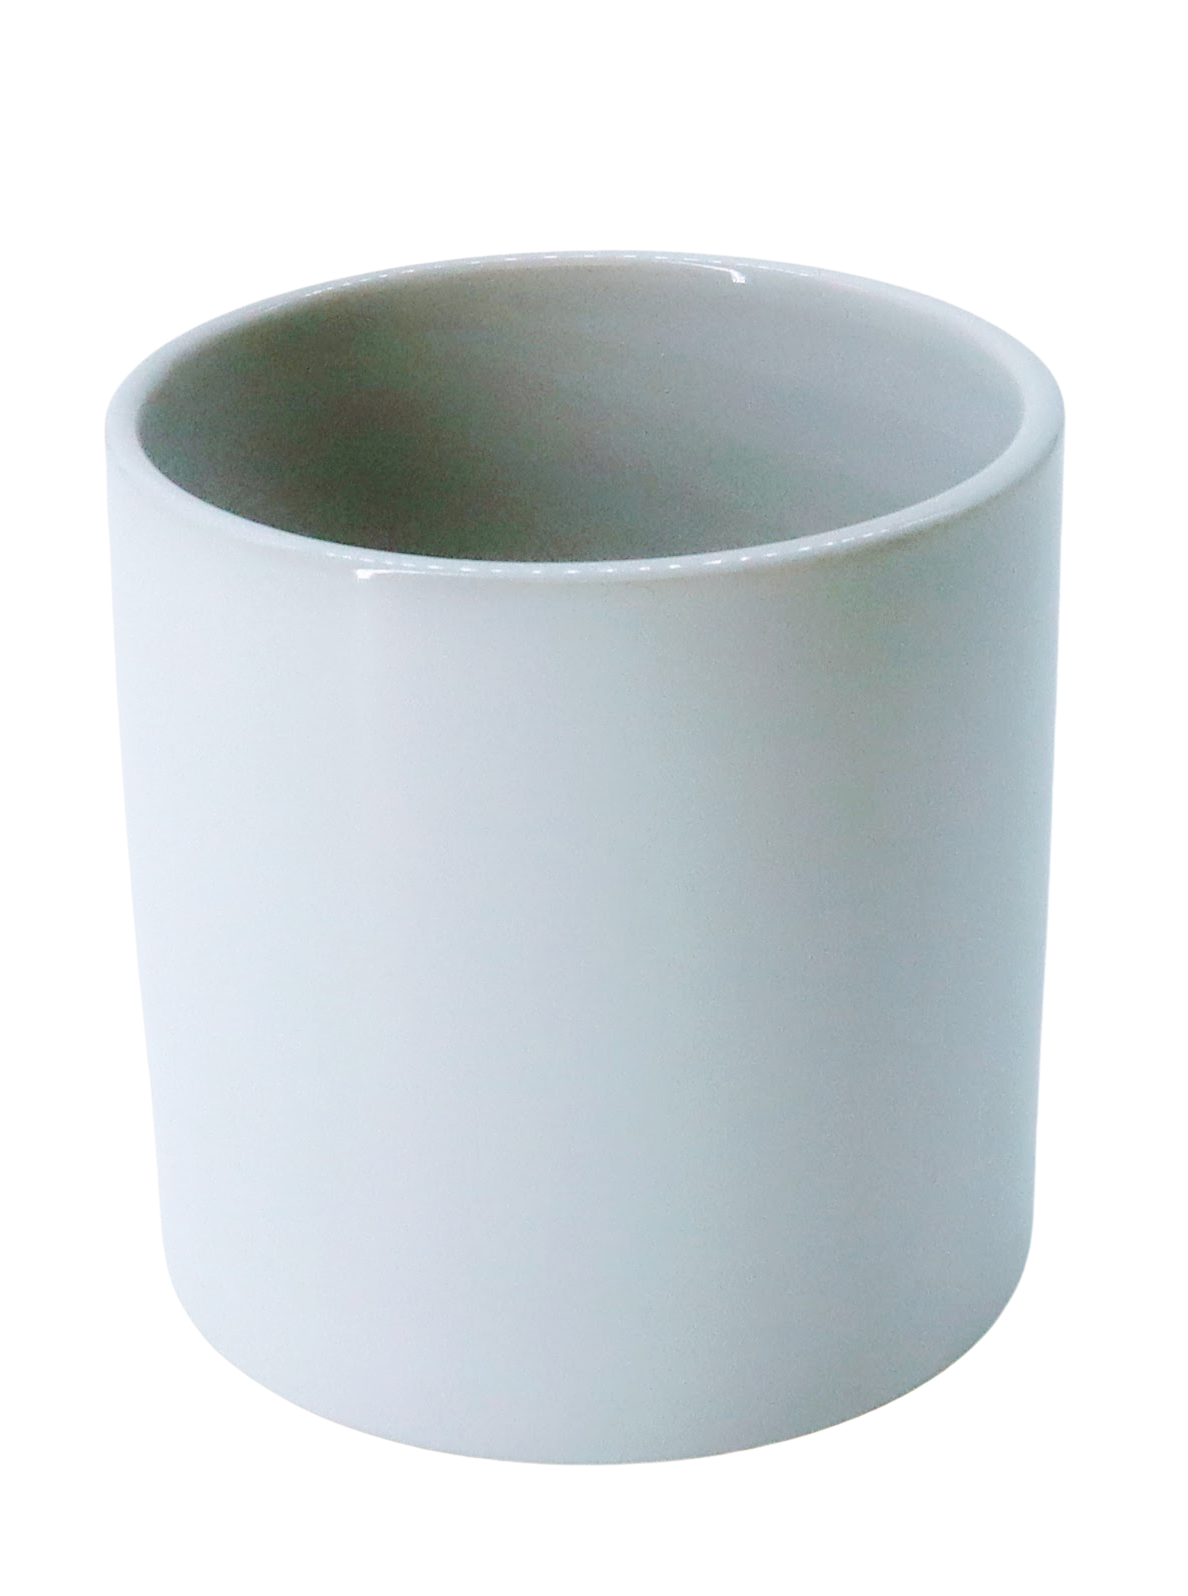 Cylinder Ceramic Container 5x5